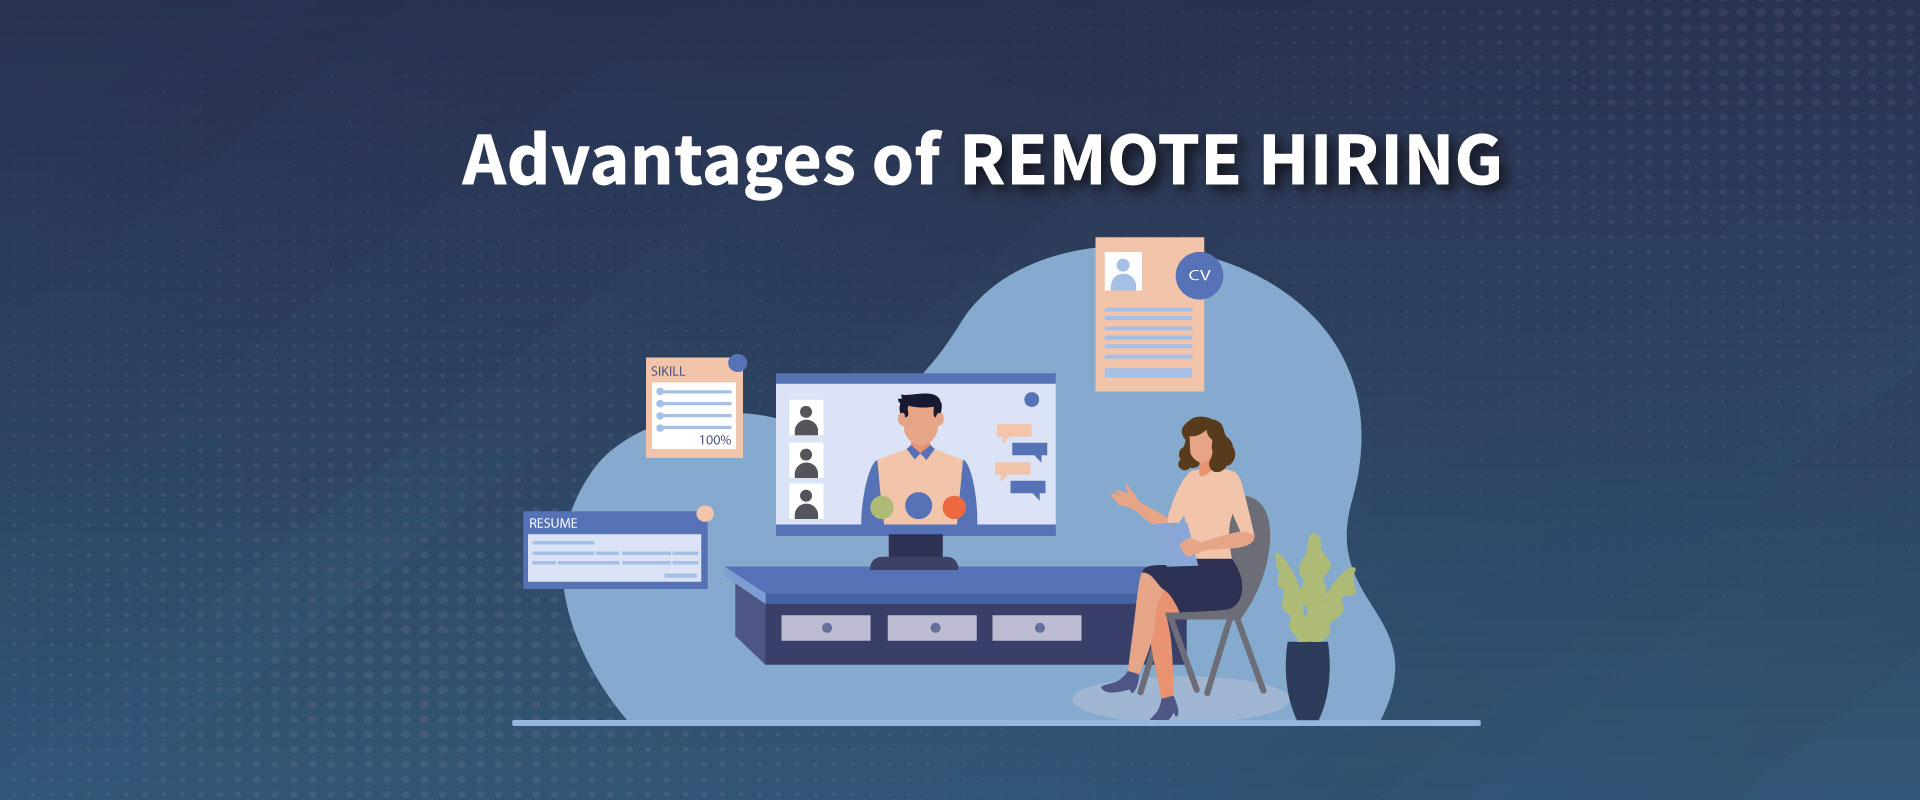 Advantages of Remote Hiring